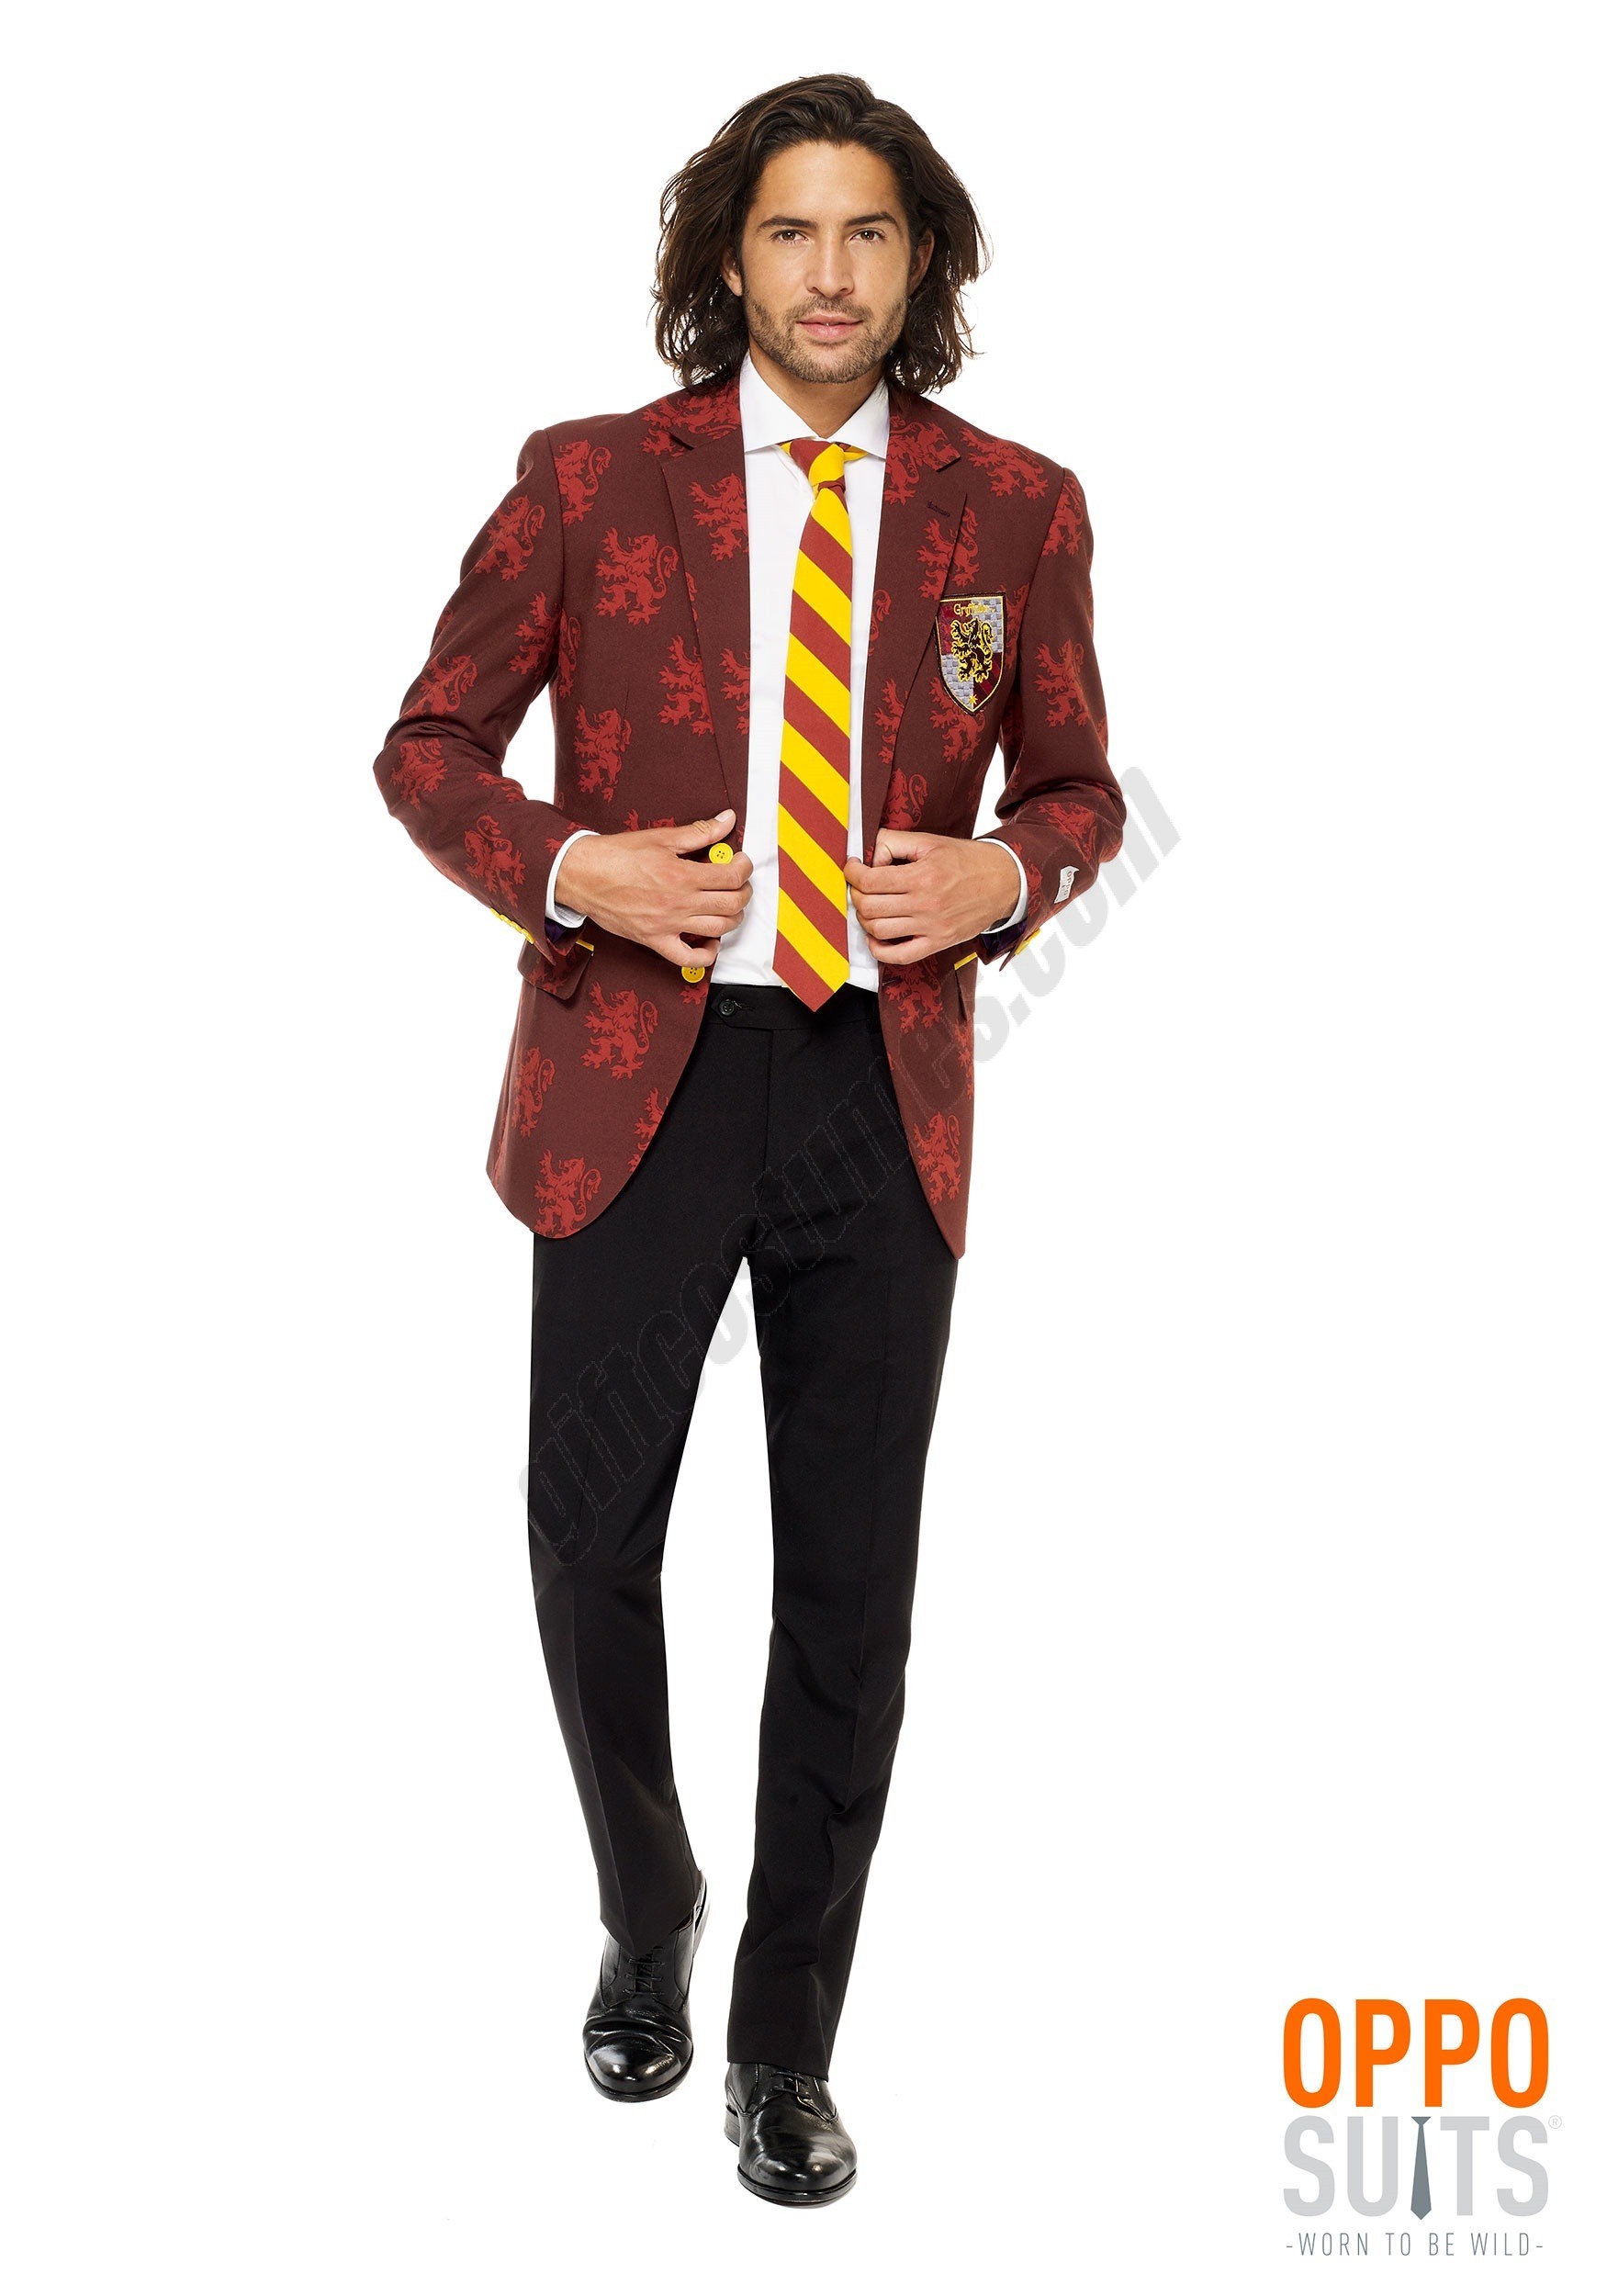 Men's Opposuits Harry Potter Suit Costume Promotions - Men's Opposuits Harry Potter Suit Costume Promotions